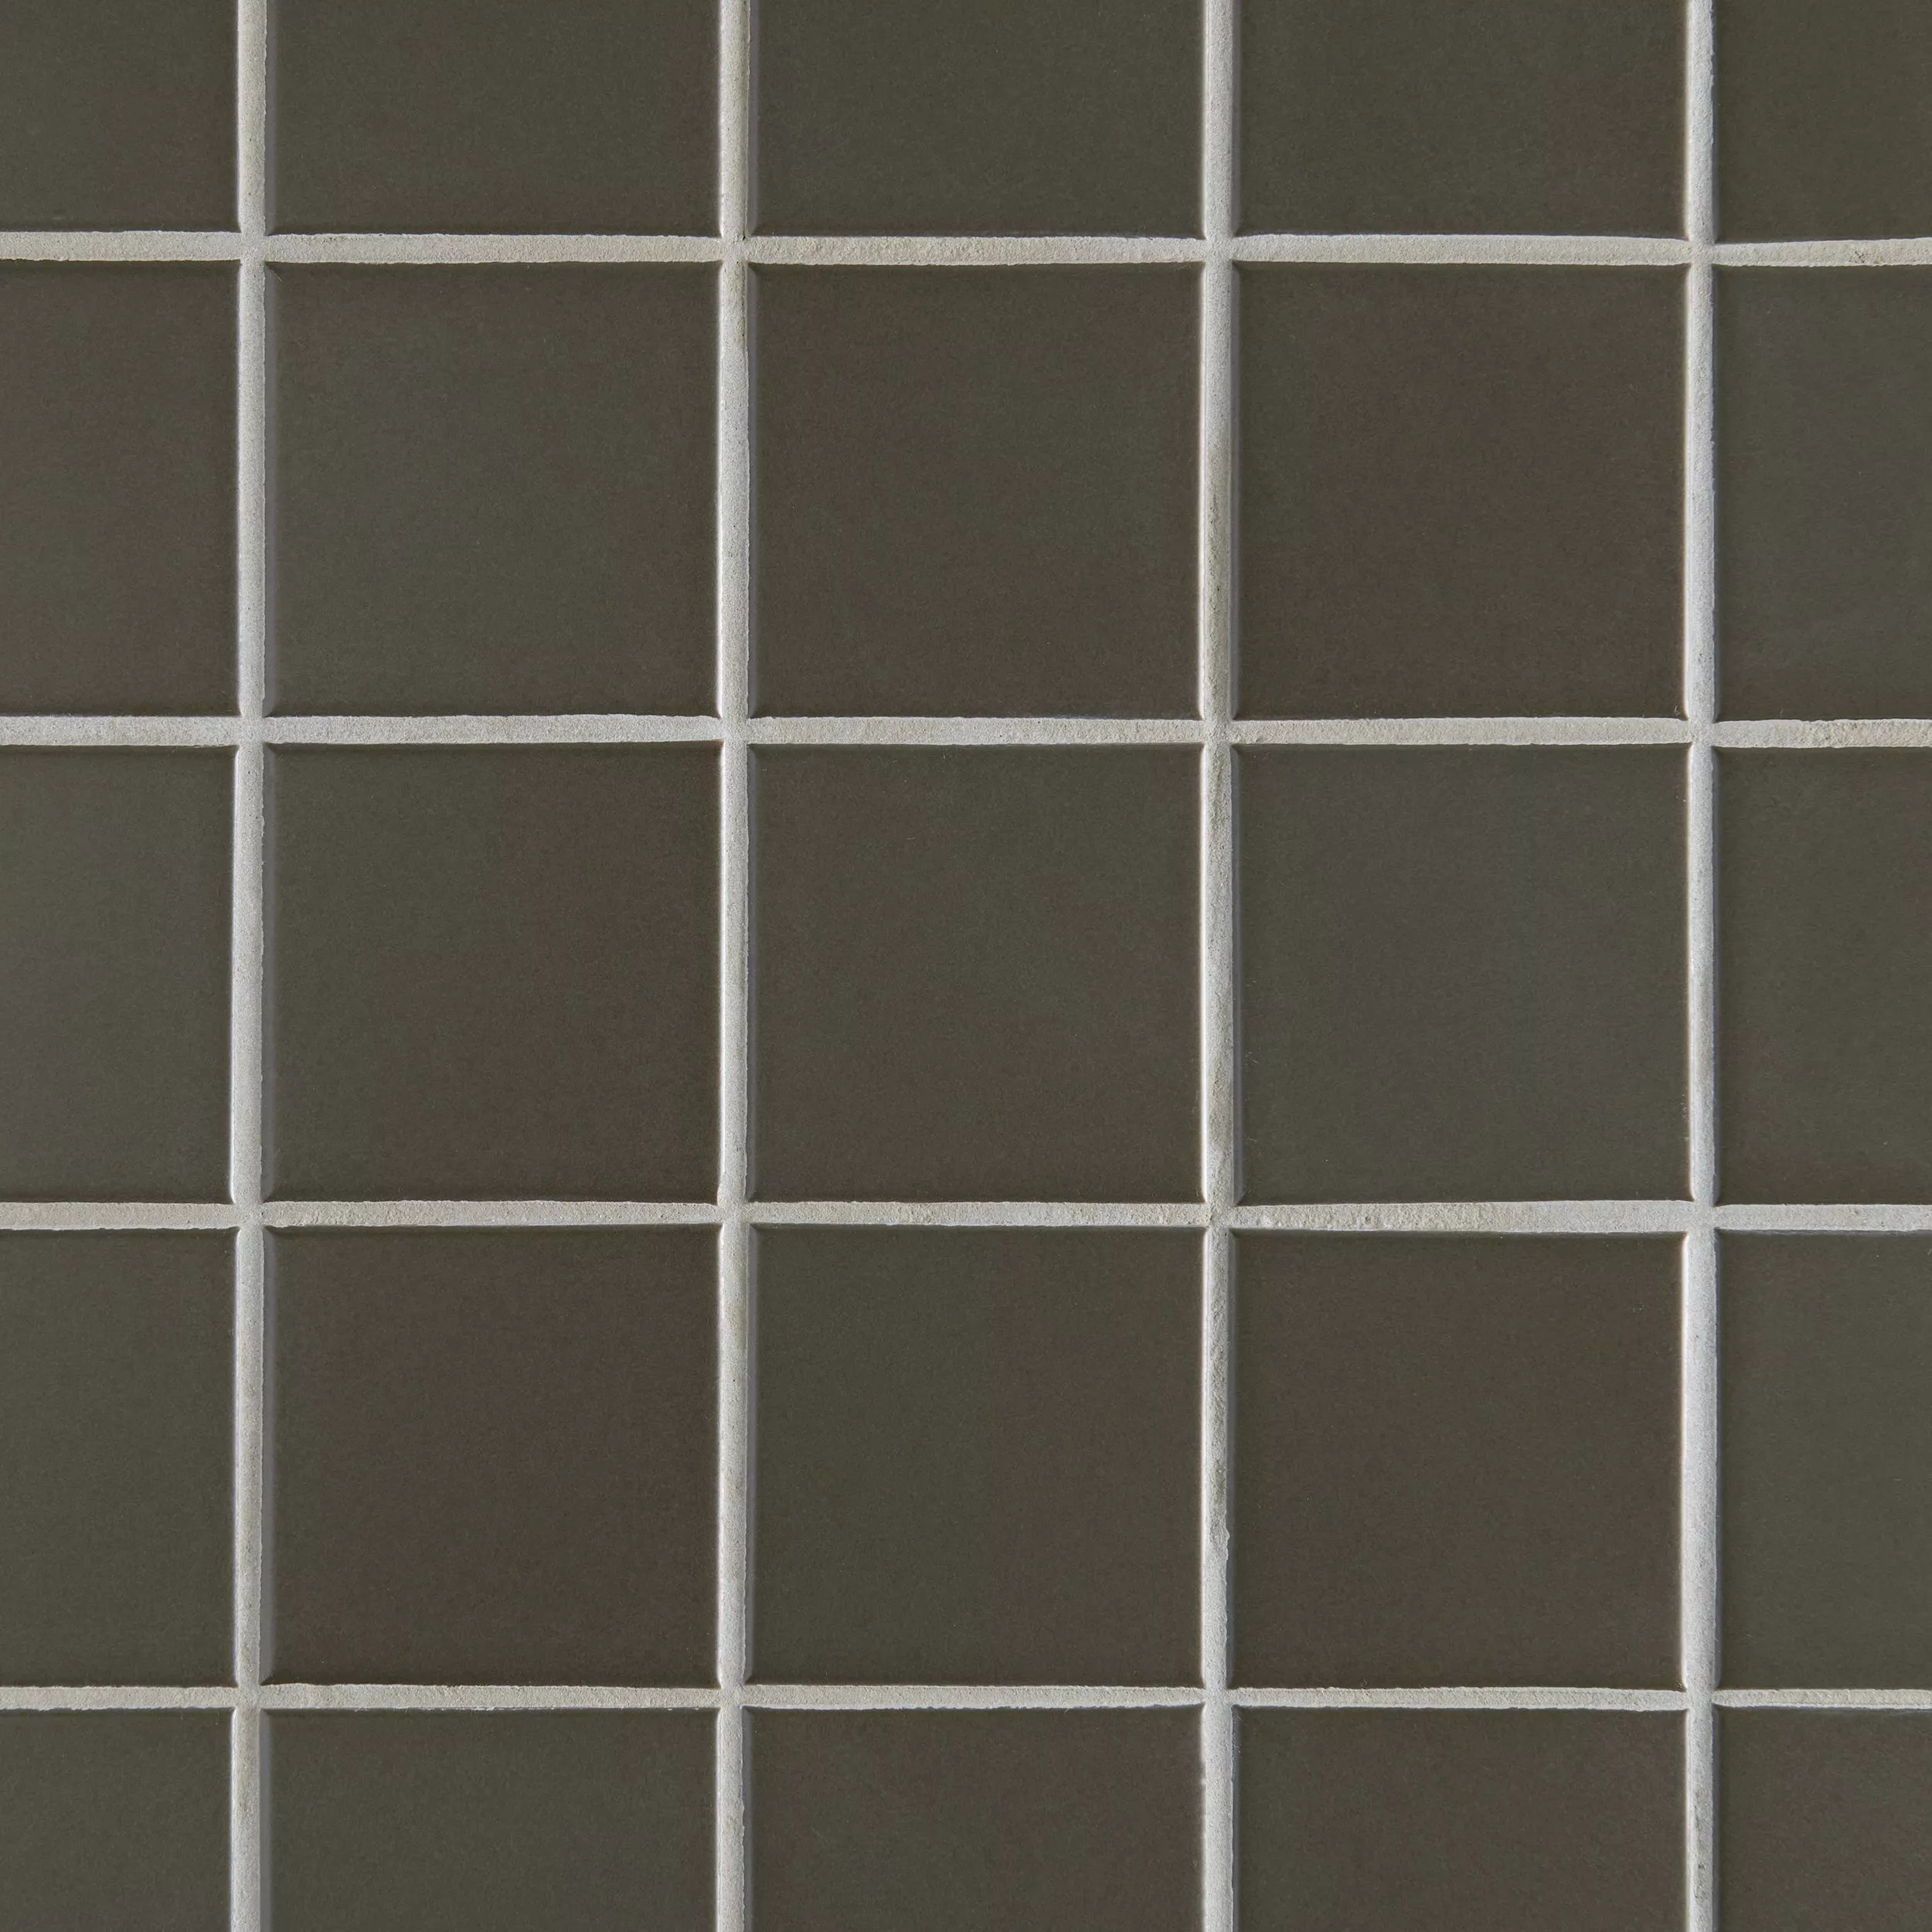 Mosaic Tile Decorative Vinyl Floor Mat – 2' x 3' 